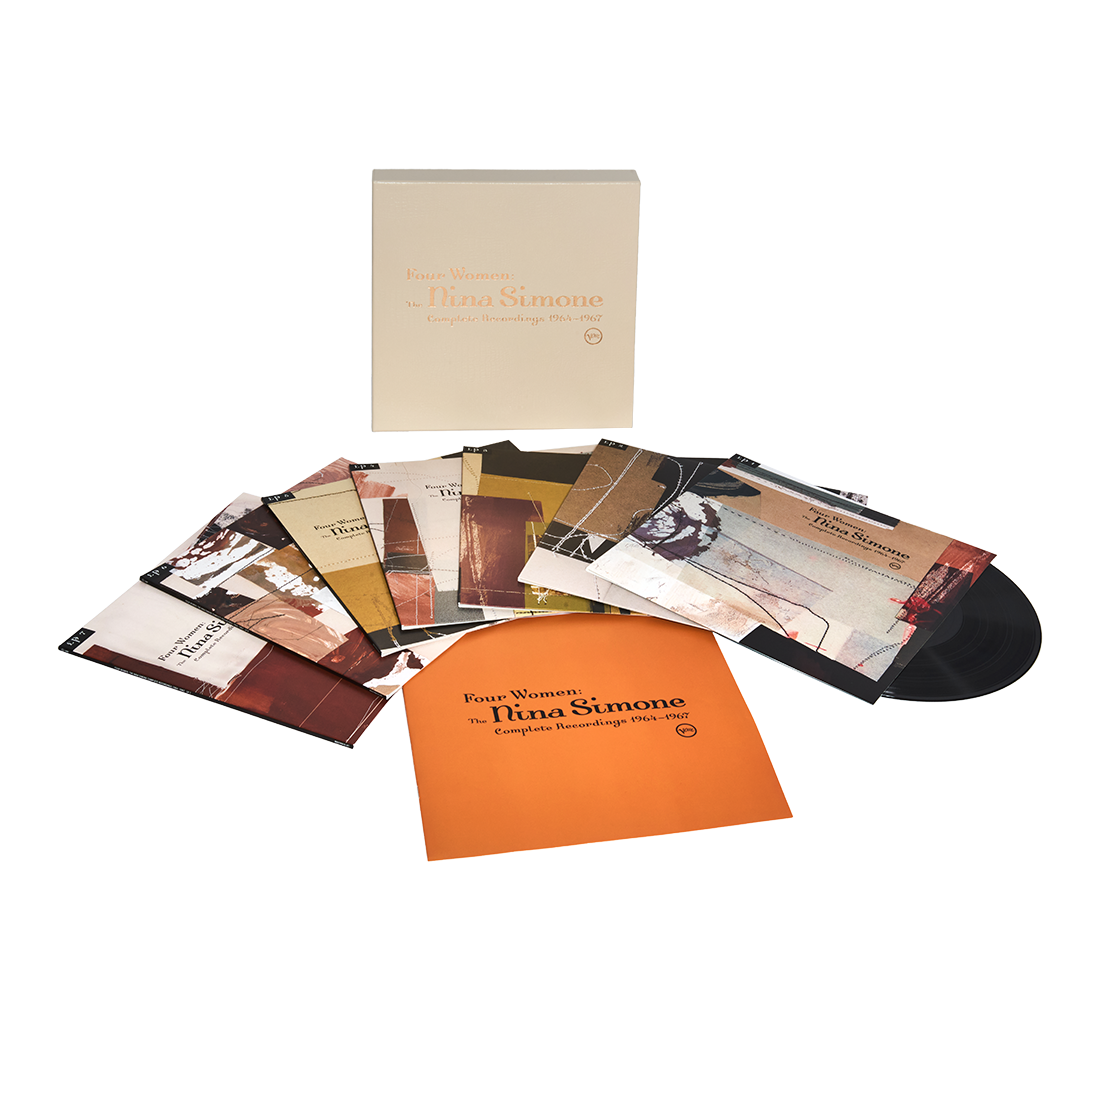 Nina Simone - Four Women - The Nina Simone Complete Recordings 1964–1967: 7LP Boxset